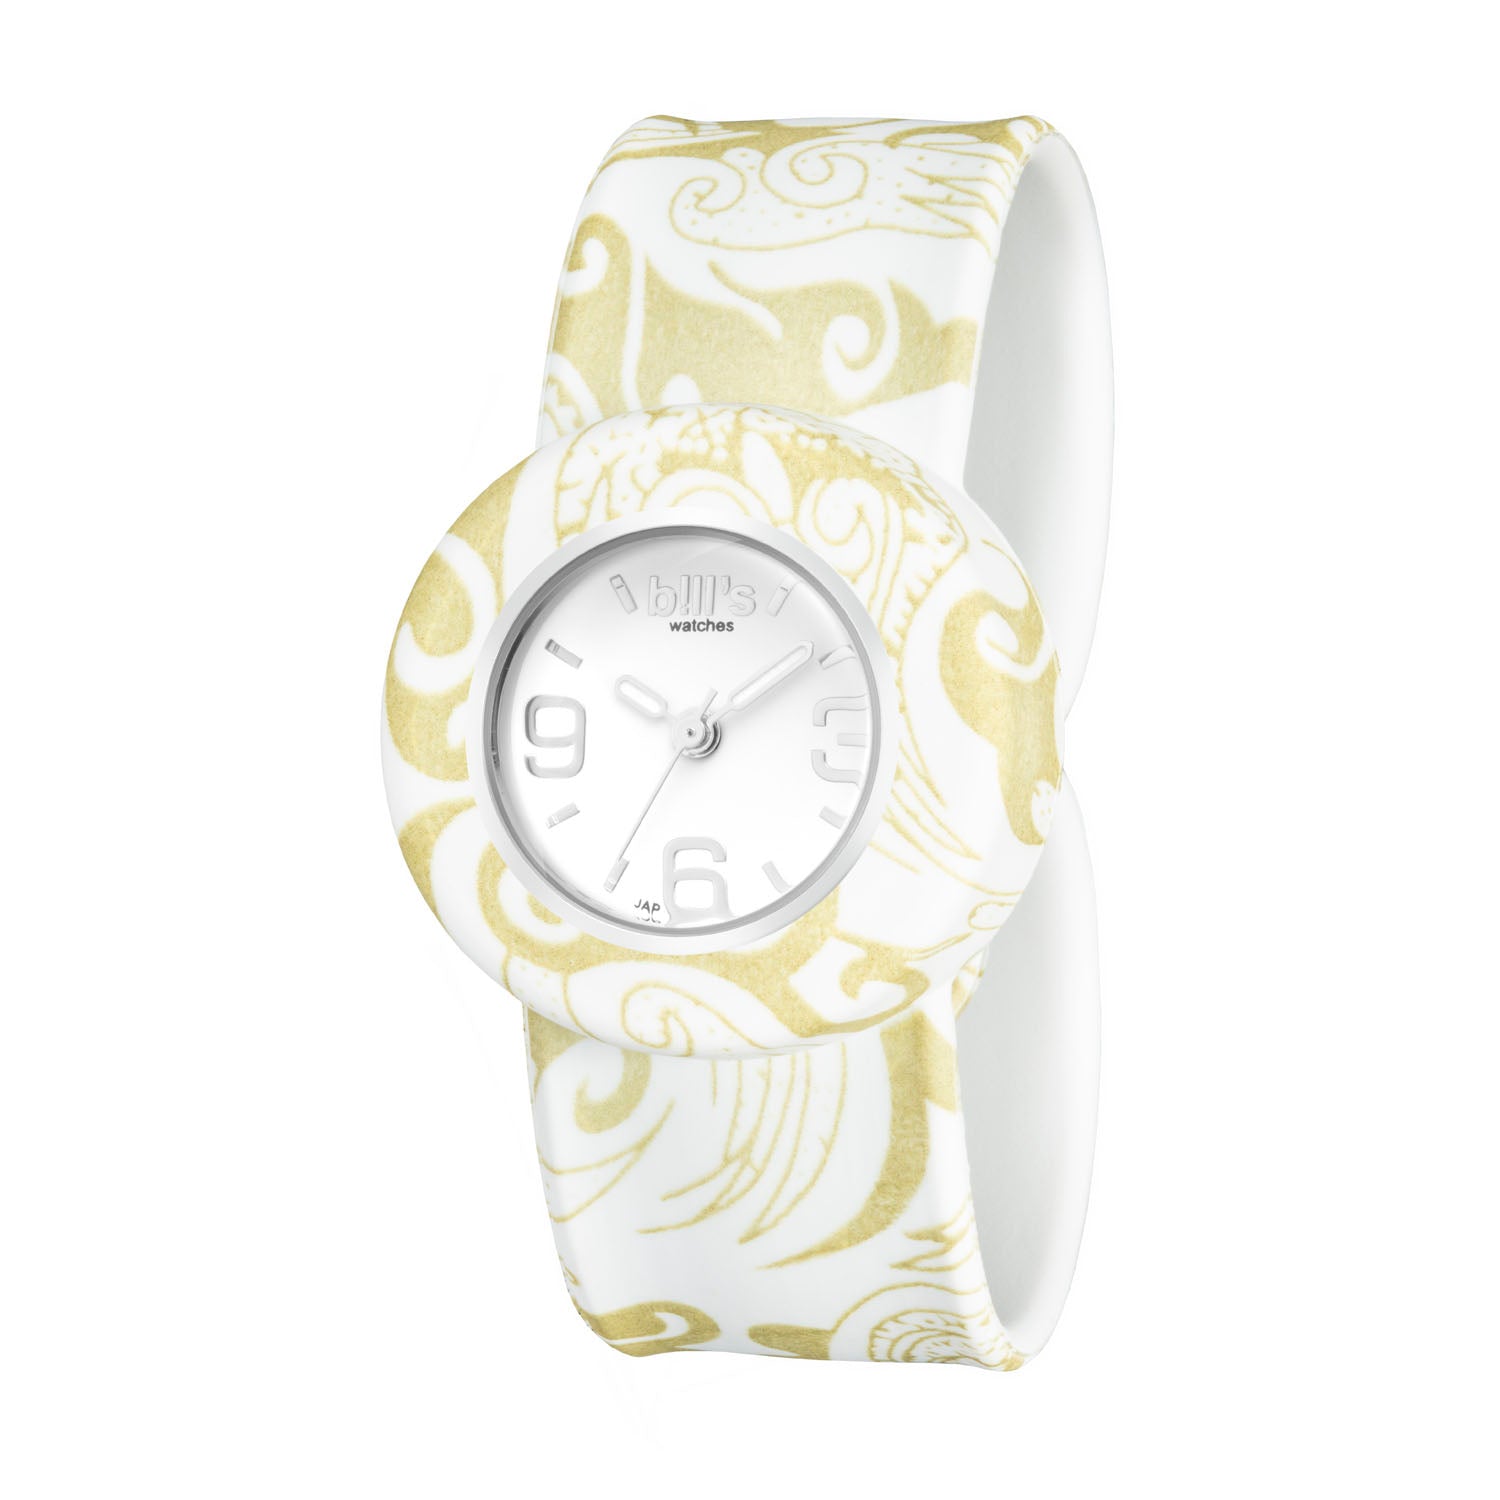 Mini Watch - Gold White Orient